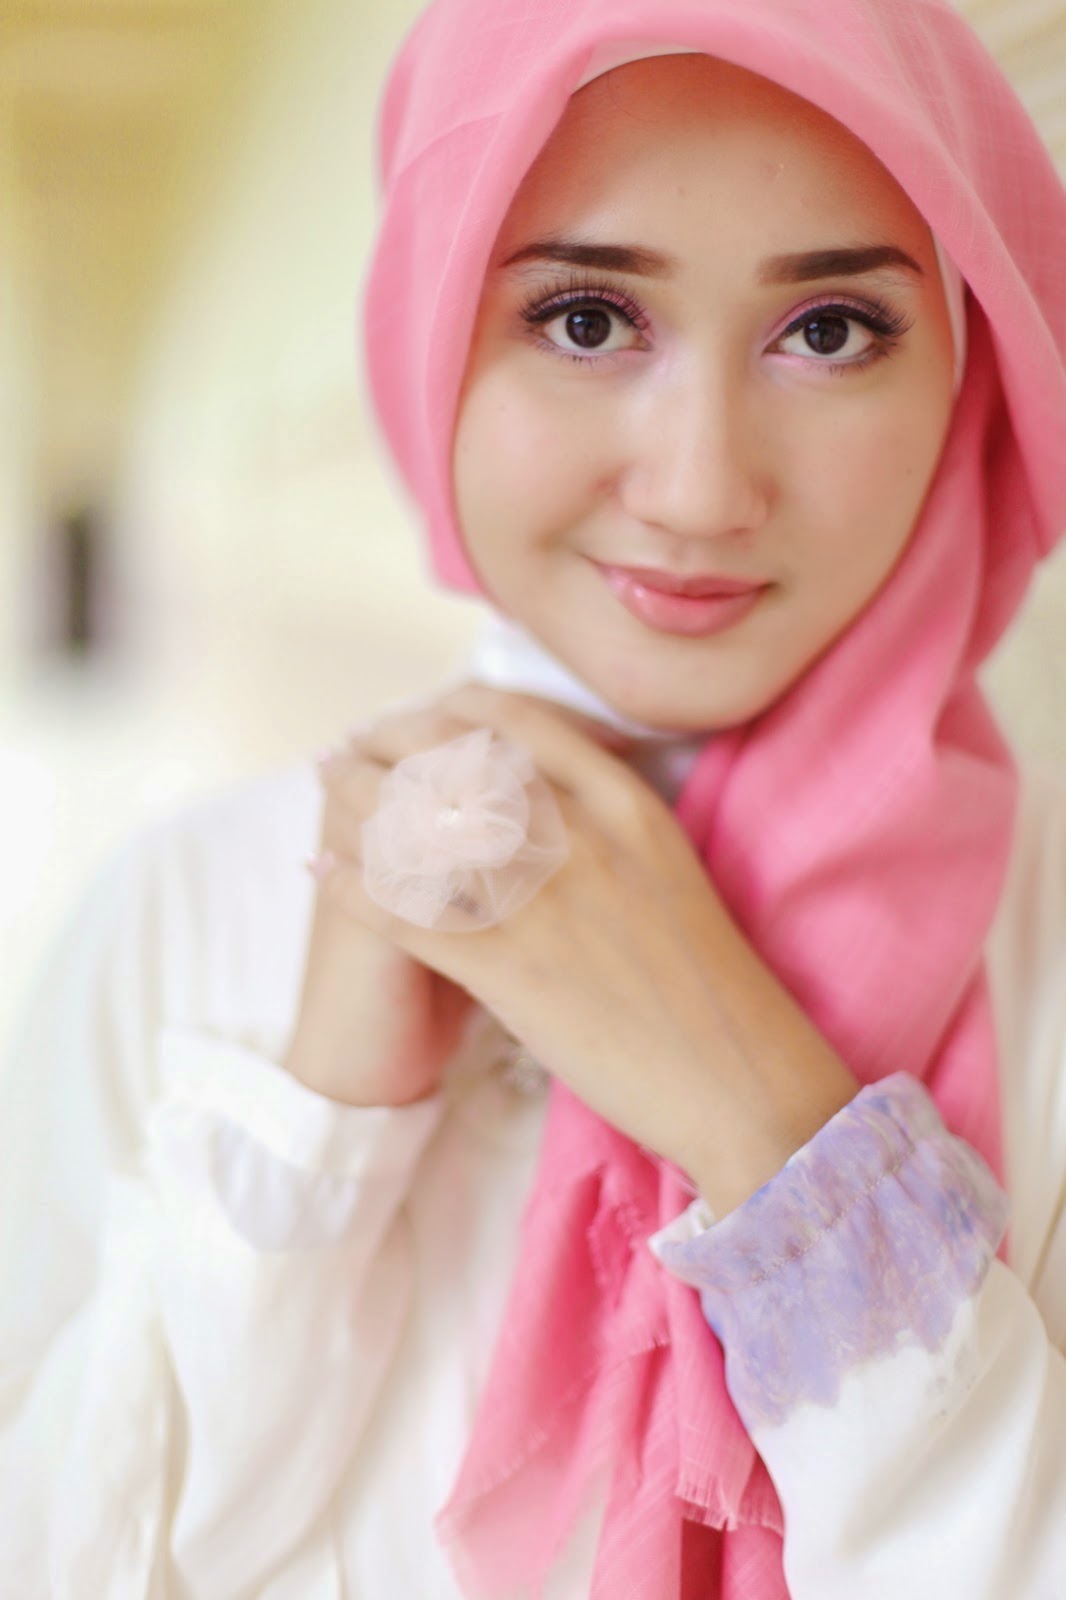 1066 x 1600 jpeg 106kB, Dp girl hijab dp ramazan dp for girls ramzan 